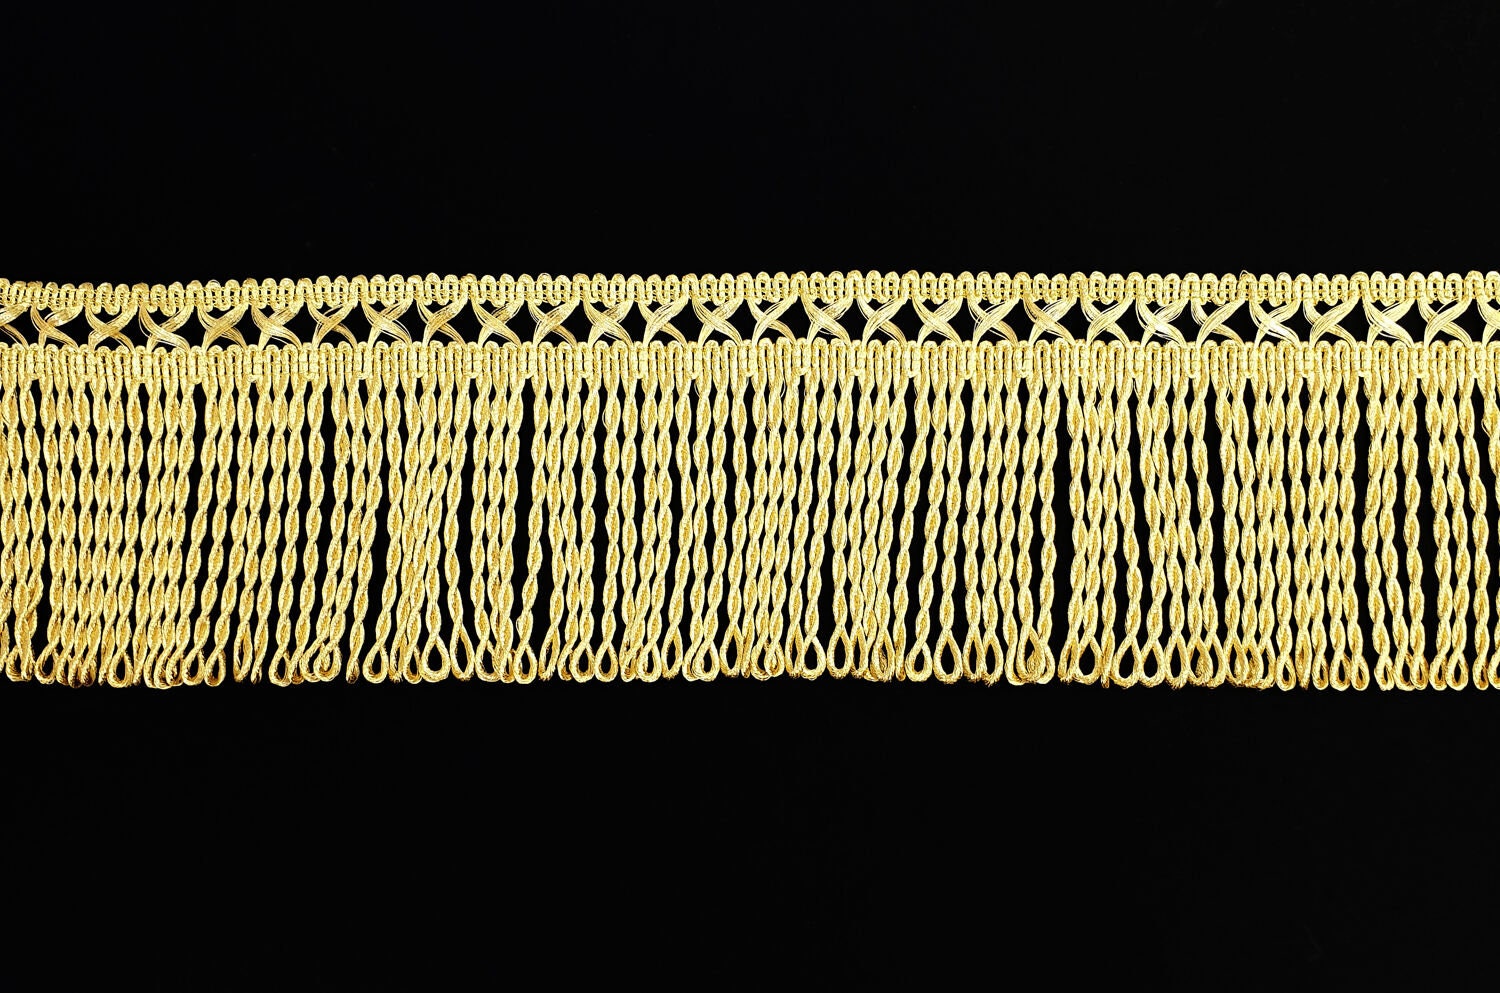 20cm Wide Gold Metallic Fringe Trim, Gold Tassel Fringe Border Sewing Trim  for Dance Performance Costumes 